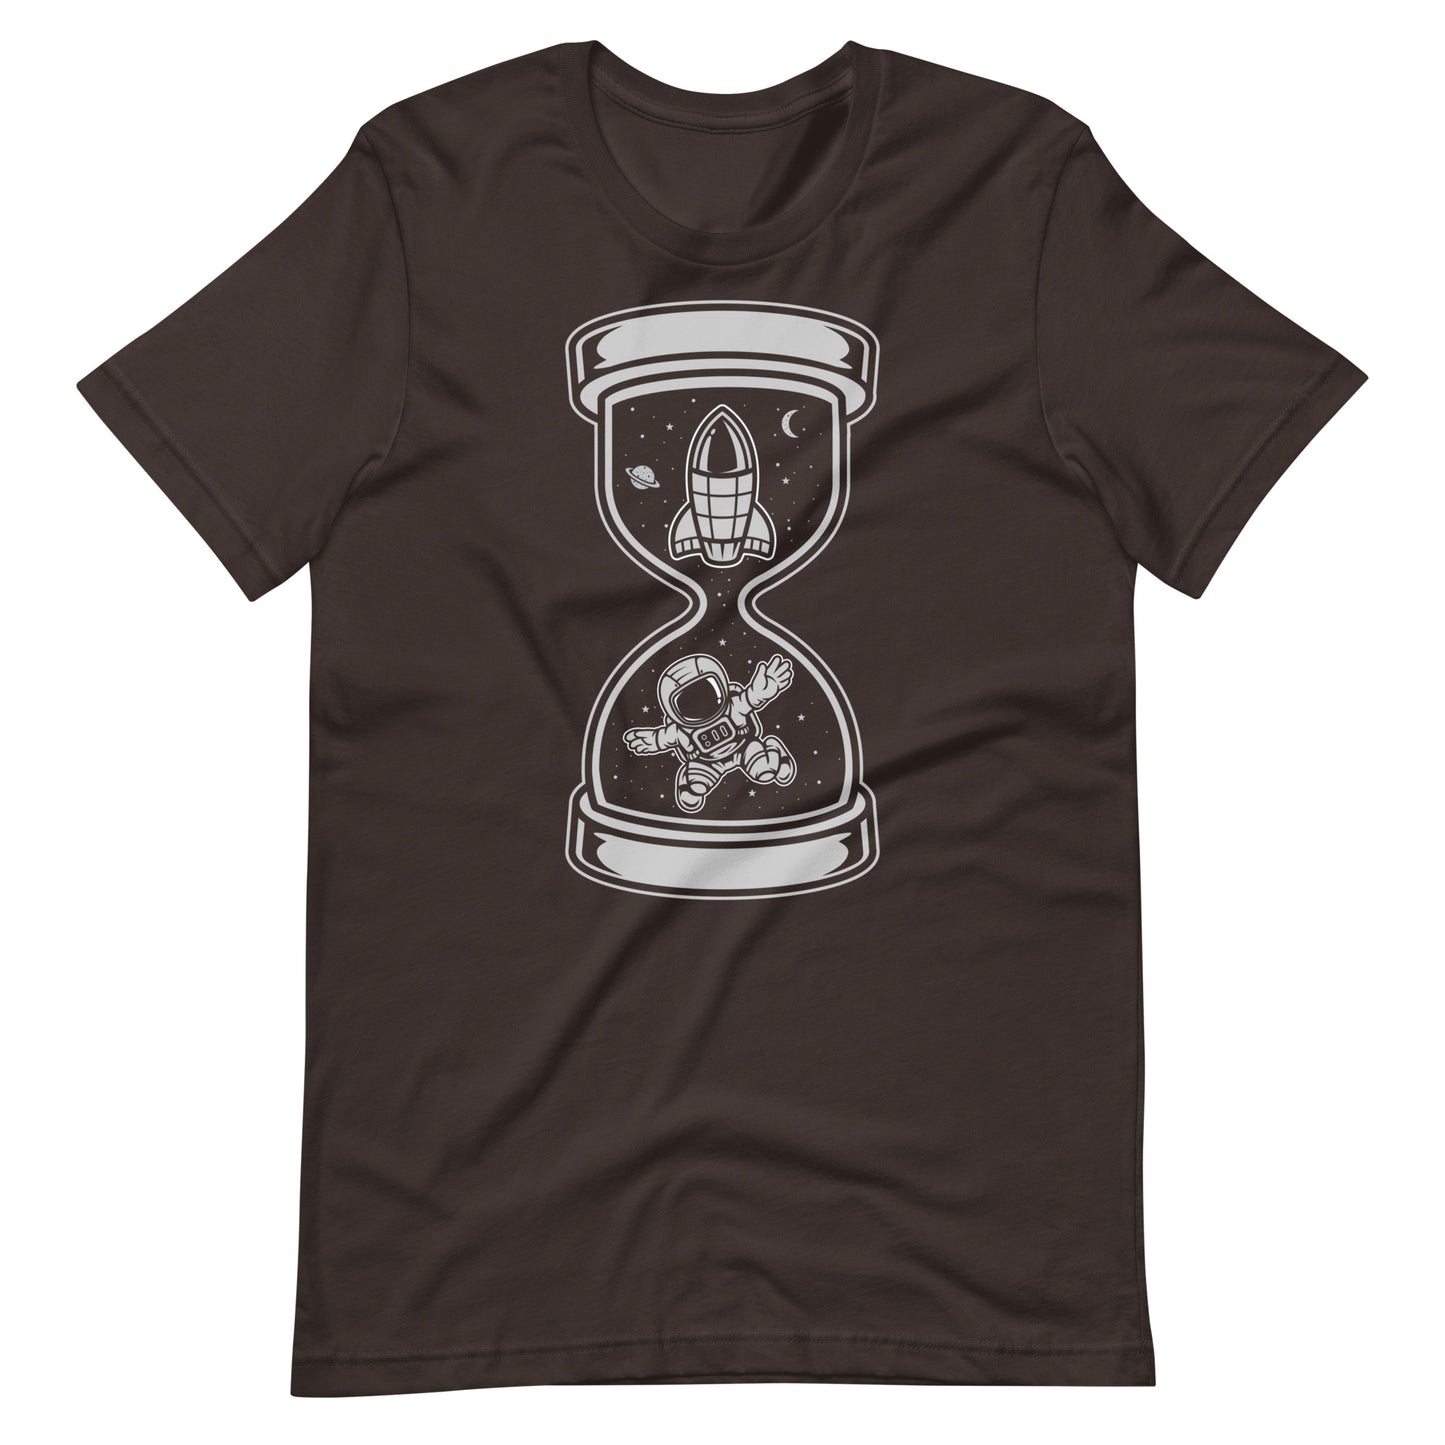 Astronaut Time - Men's t-shirt - Brown Front